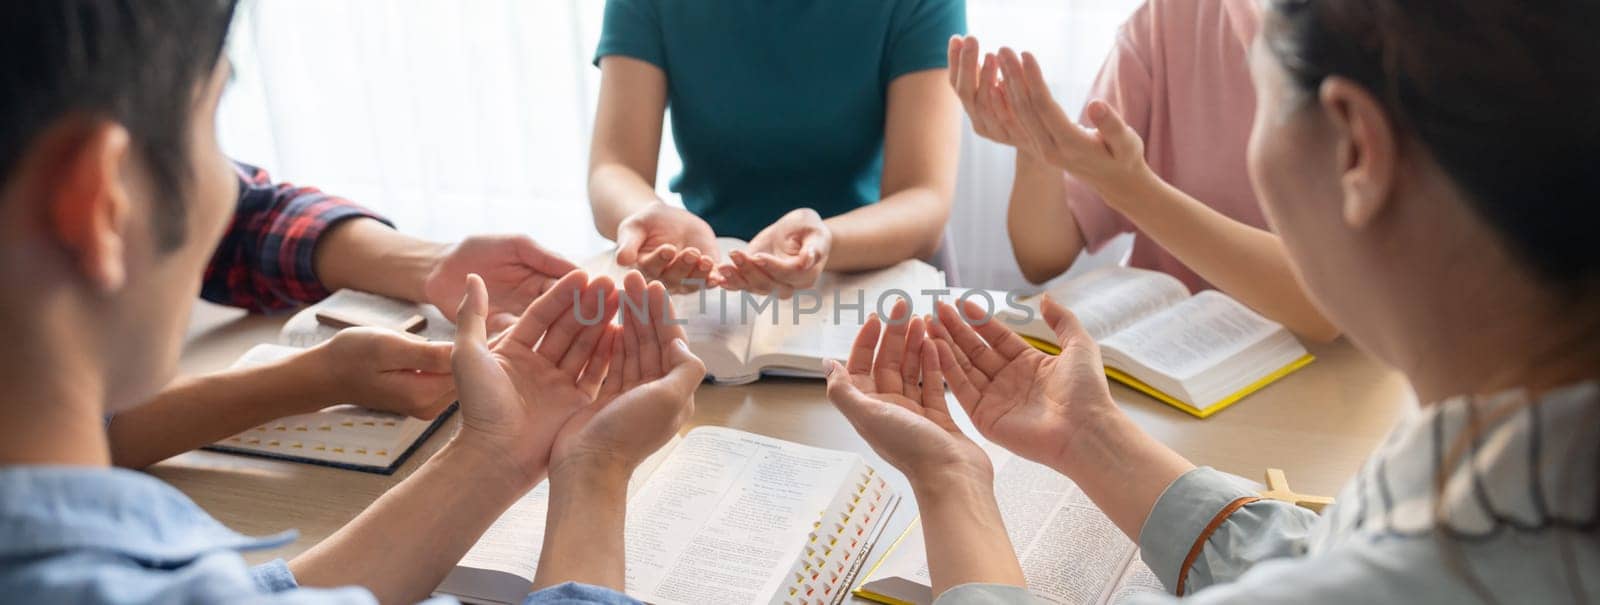 Diversity people hand praying faithfully together on bible book. Burgeoning. by biancoblue